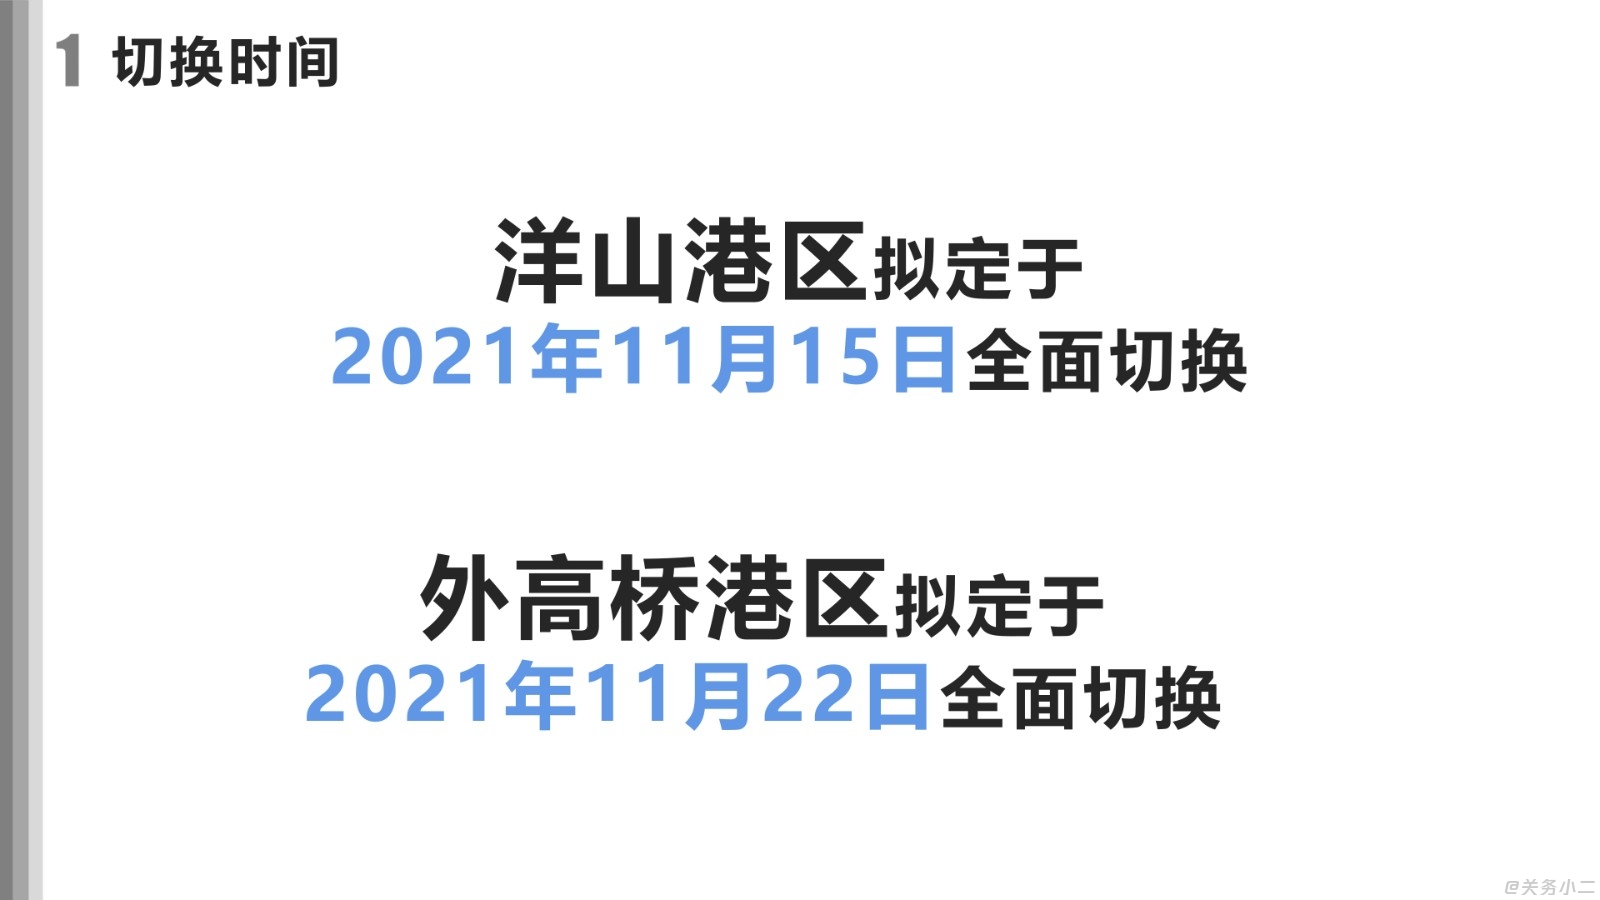 PPT-上海海关海运出口放行信息切换安排宣贯会_3.jpg